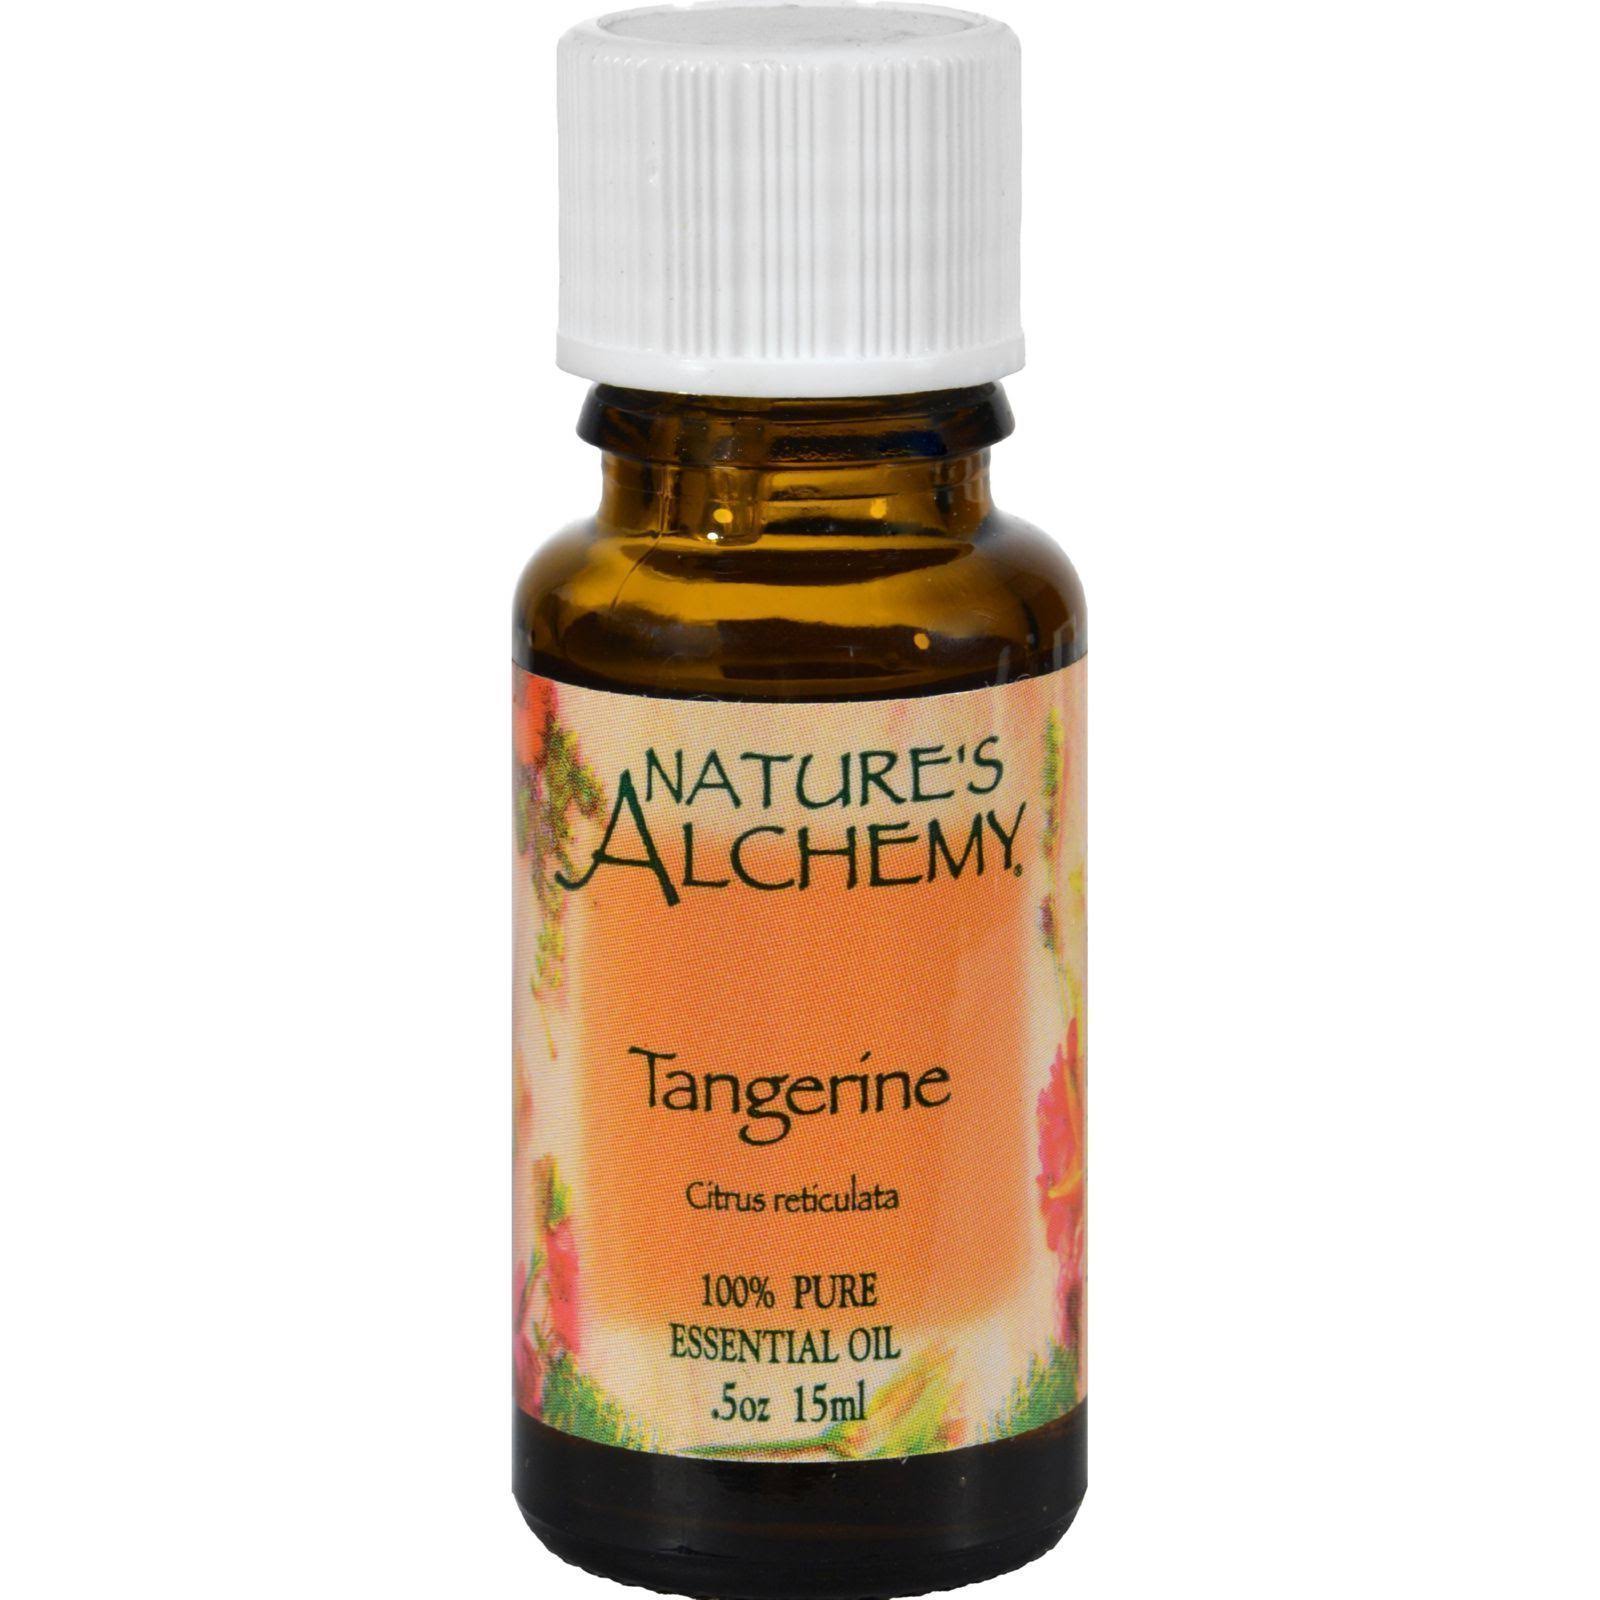 Nature's Alchemy Pure Essential Oil - Tangerine, 0.5oz